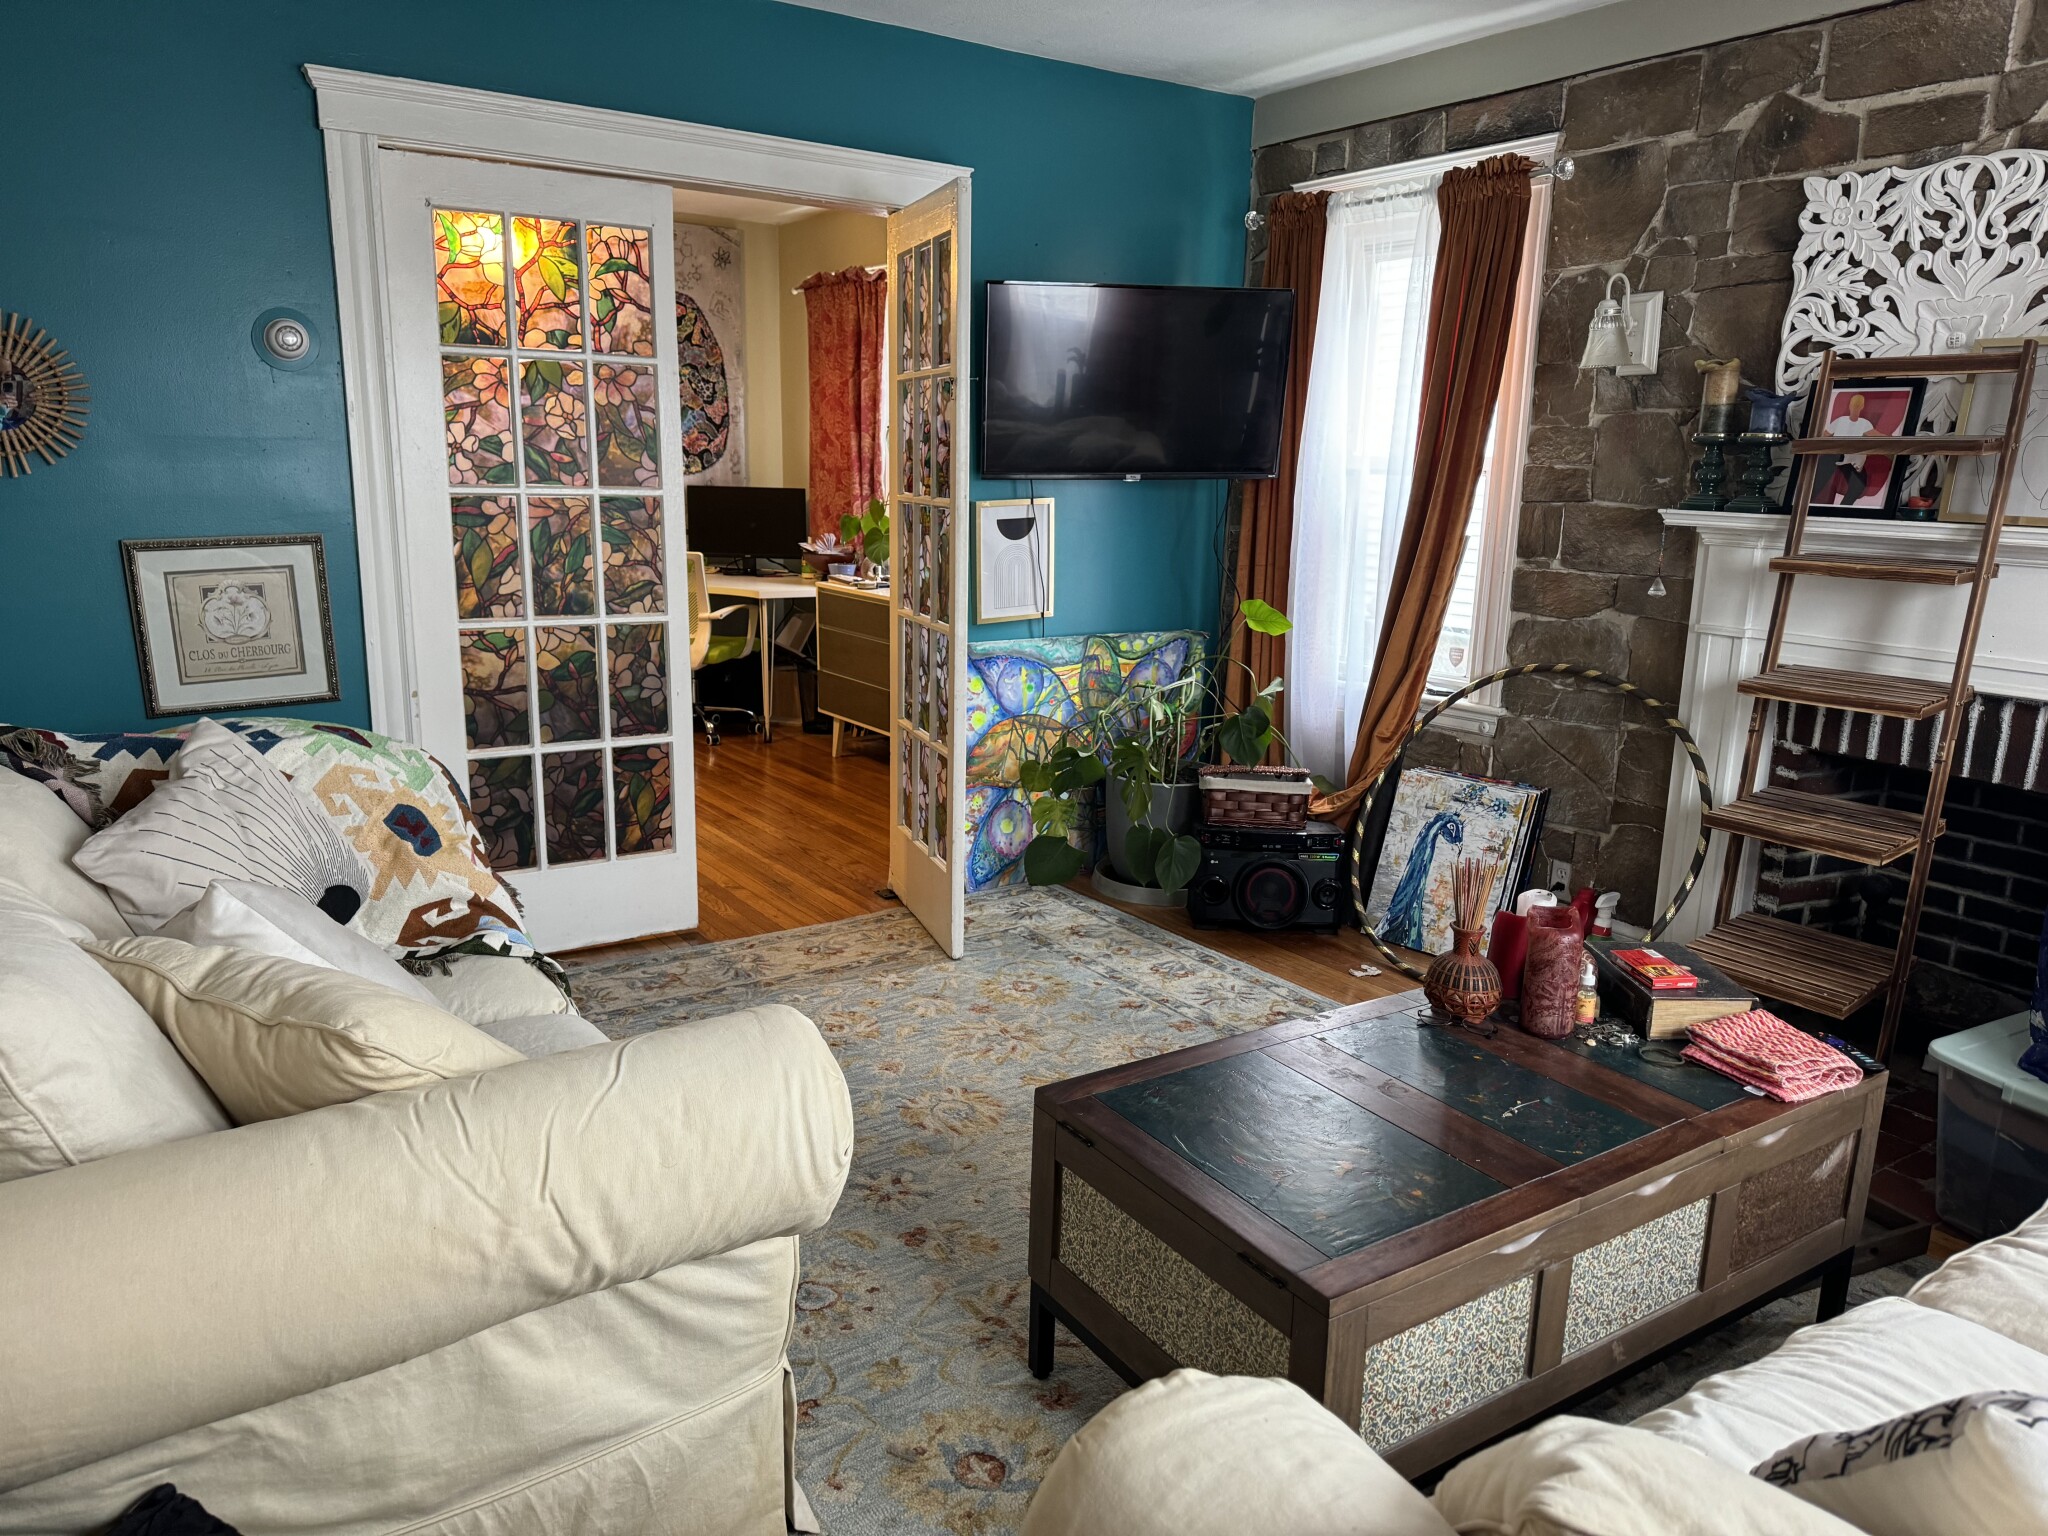 Photos of apartment on Hazelwood St.,Boston MA 02119